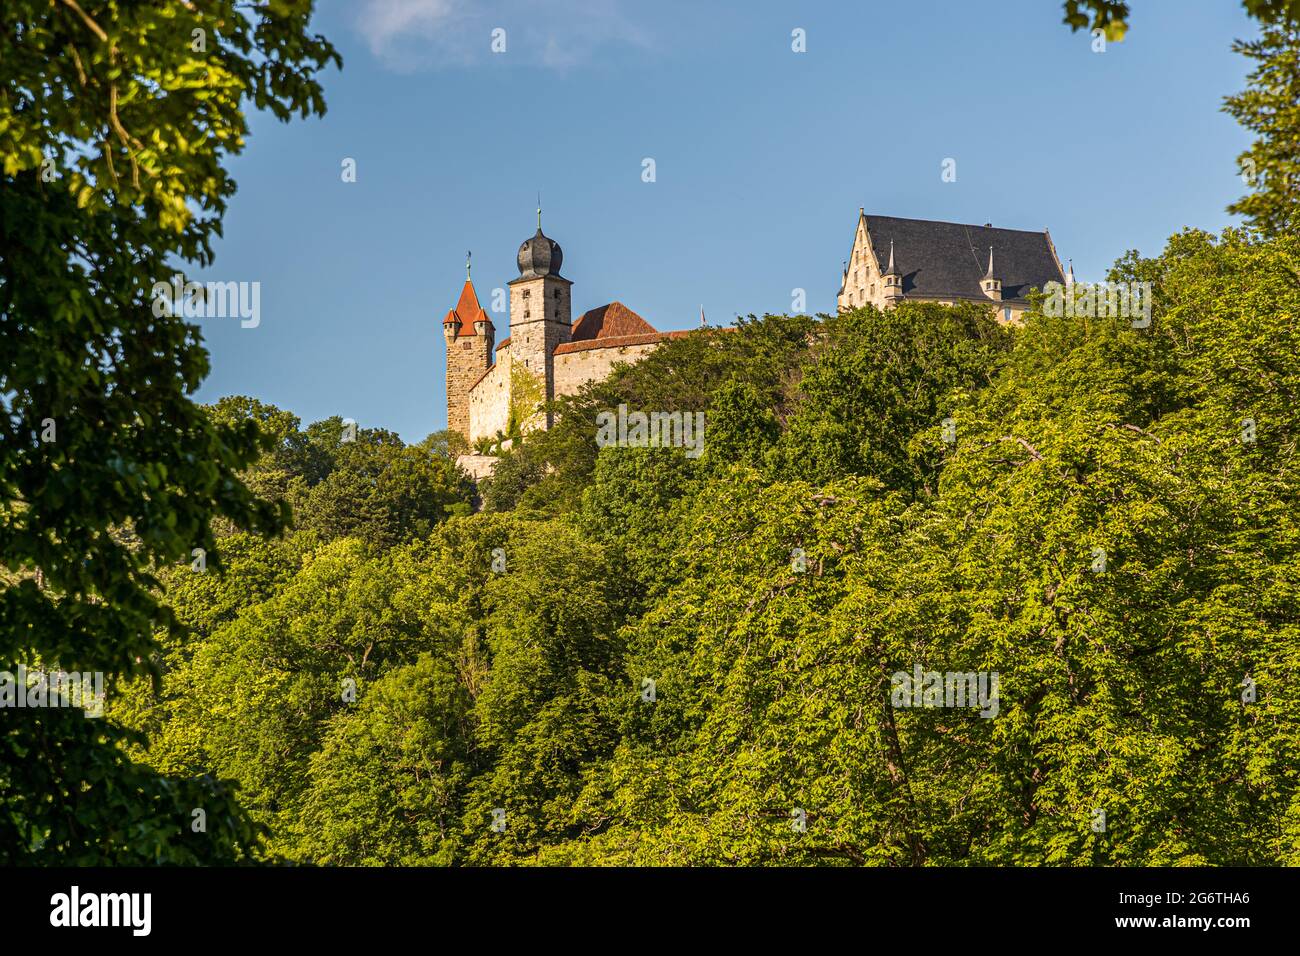 Veste Coburg (Coburg Fortress), Germany Stock Photo